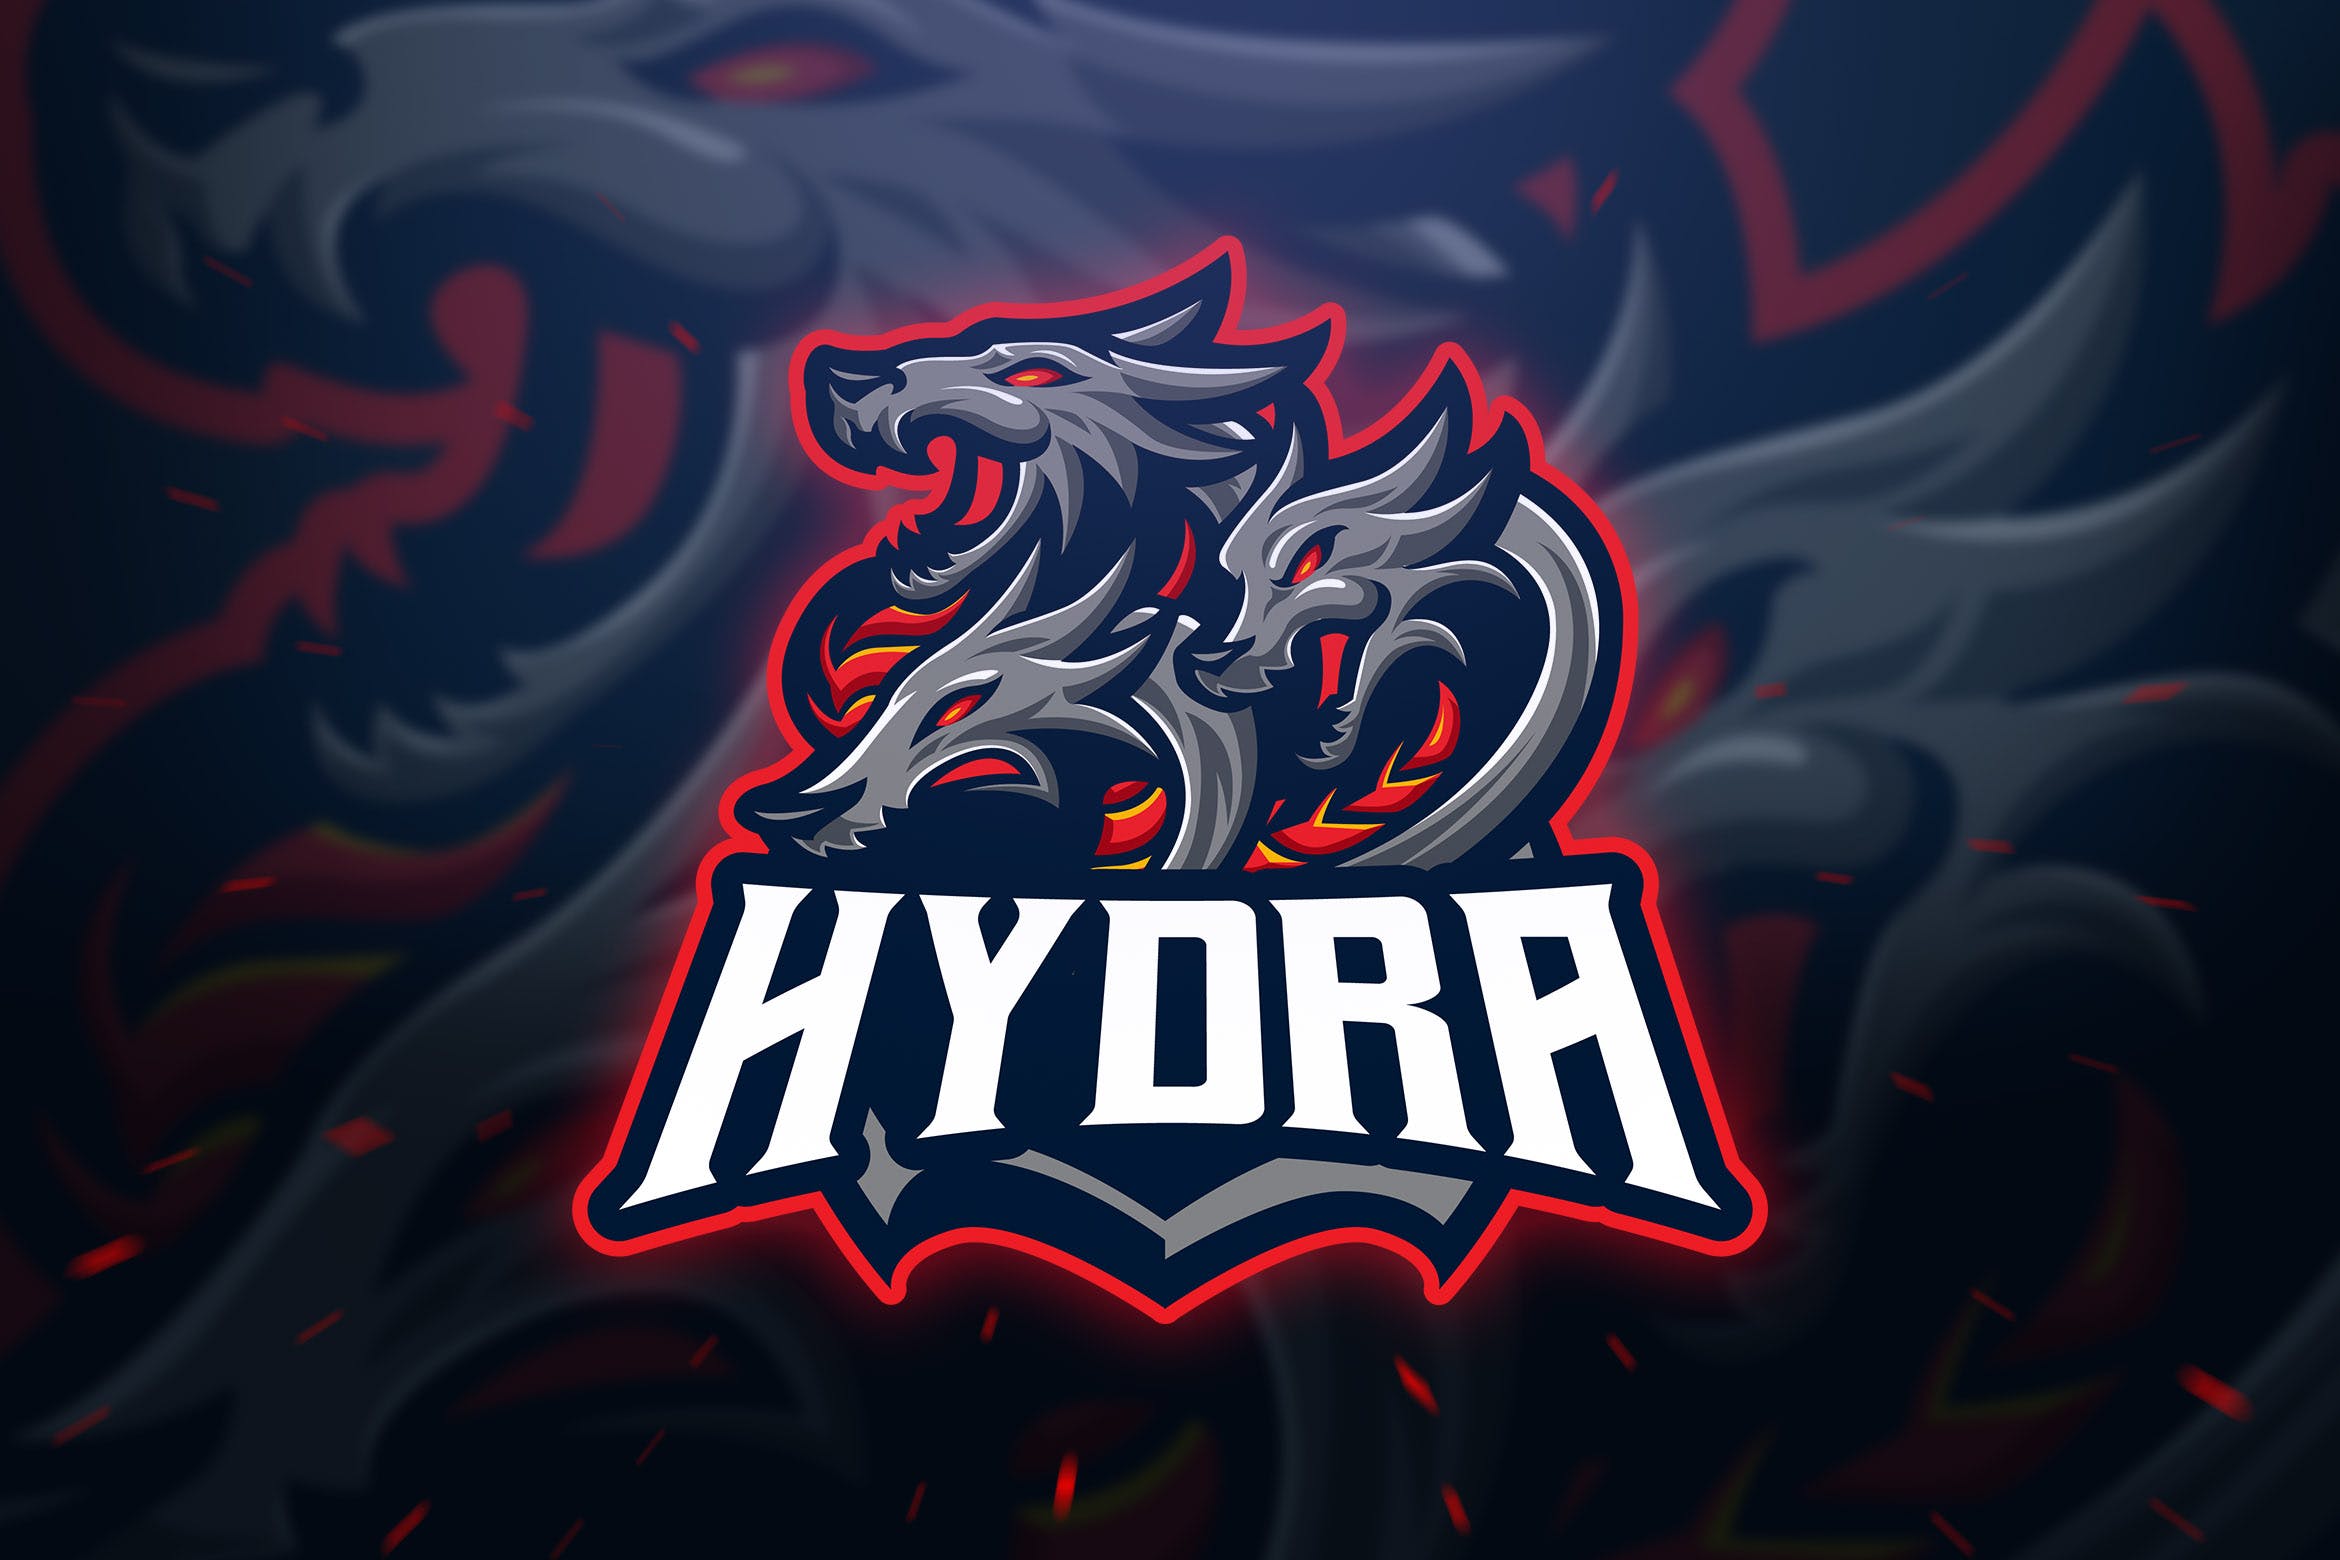 九头蛇电子竞技战队Logo设计模板 Hydra Sport and Esport Logo Template插图